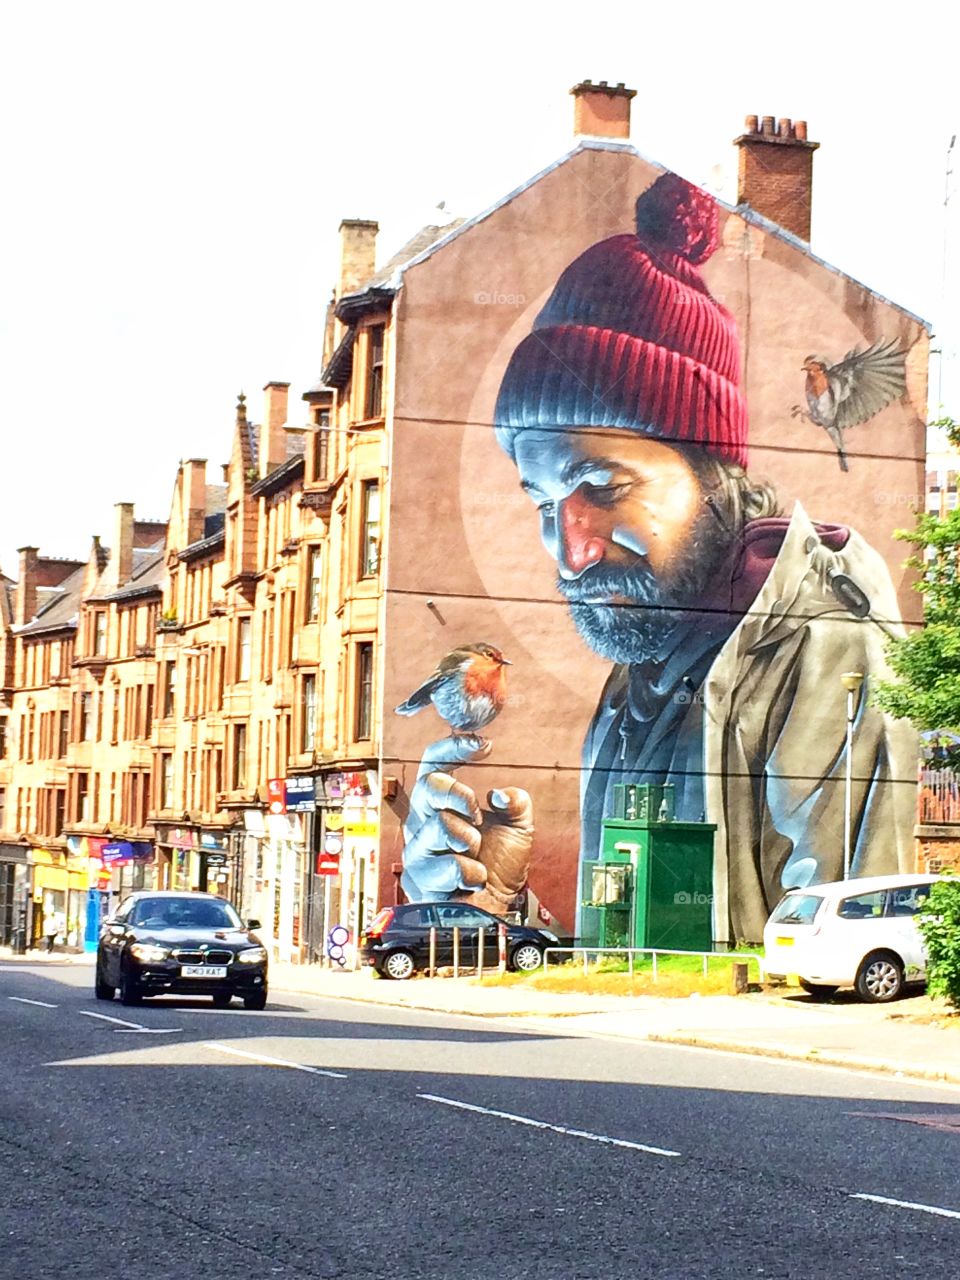 Scotland street artist photography, travel images, street-artist, wall paintings photograph, street photos, UK